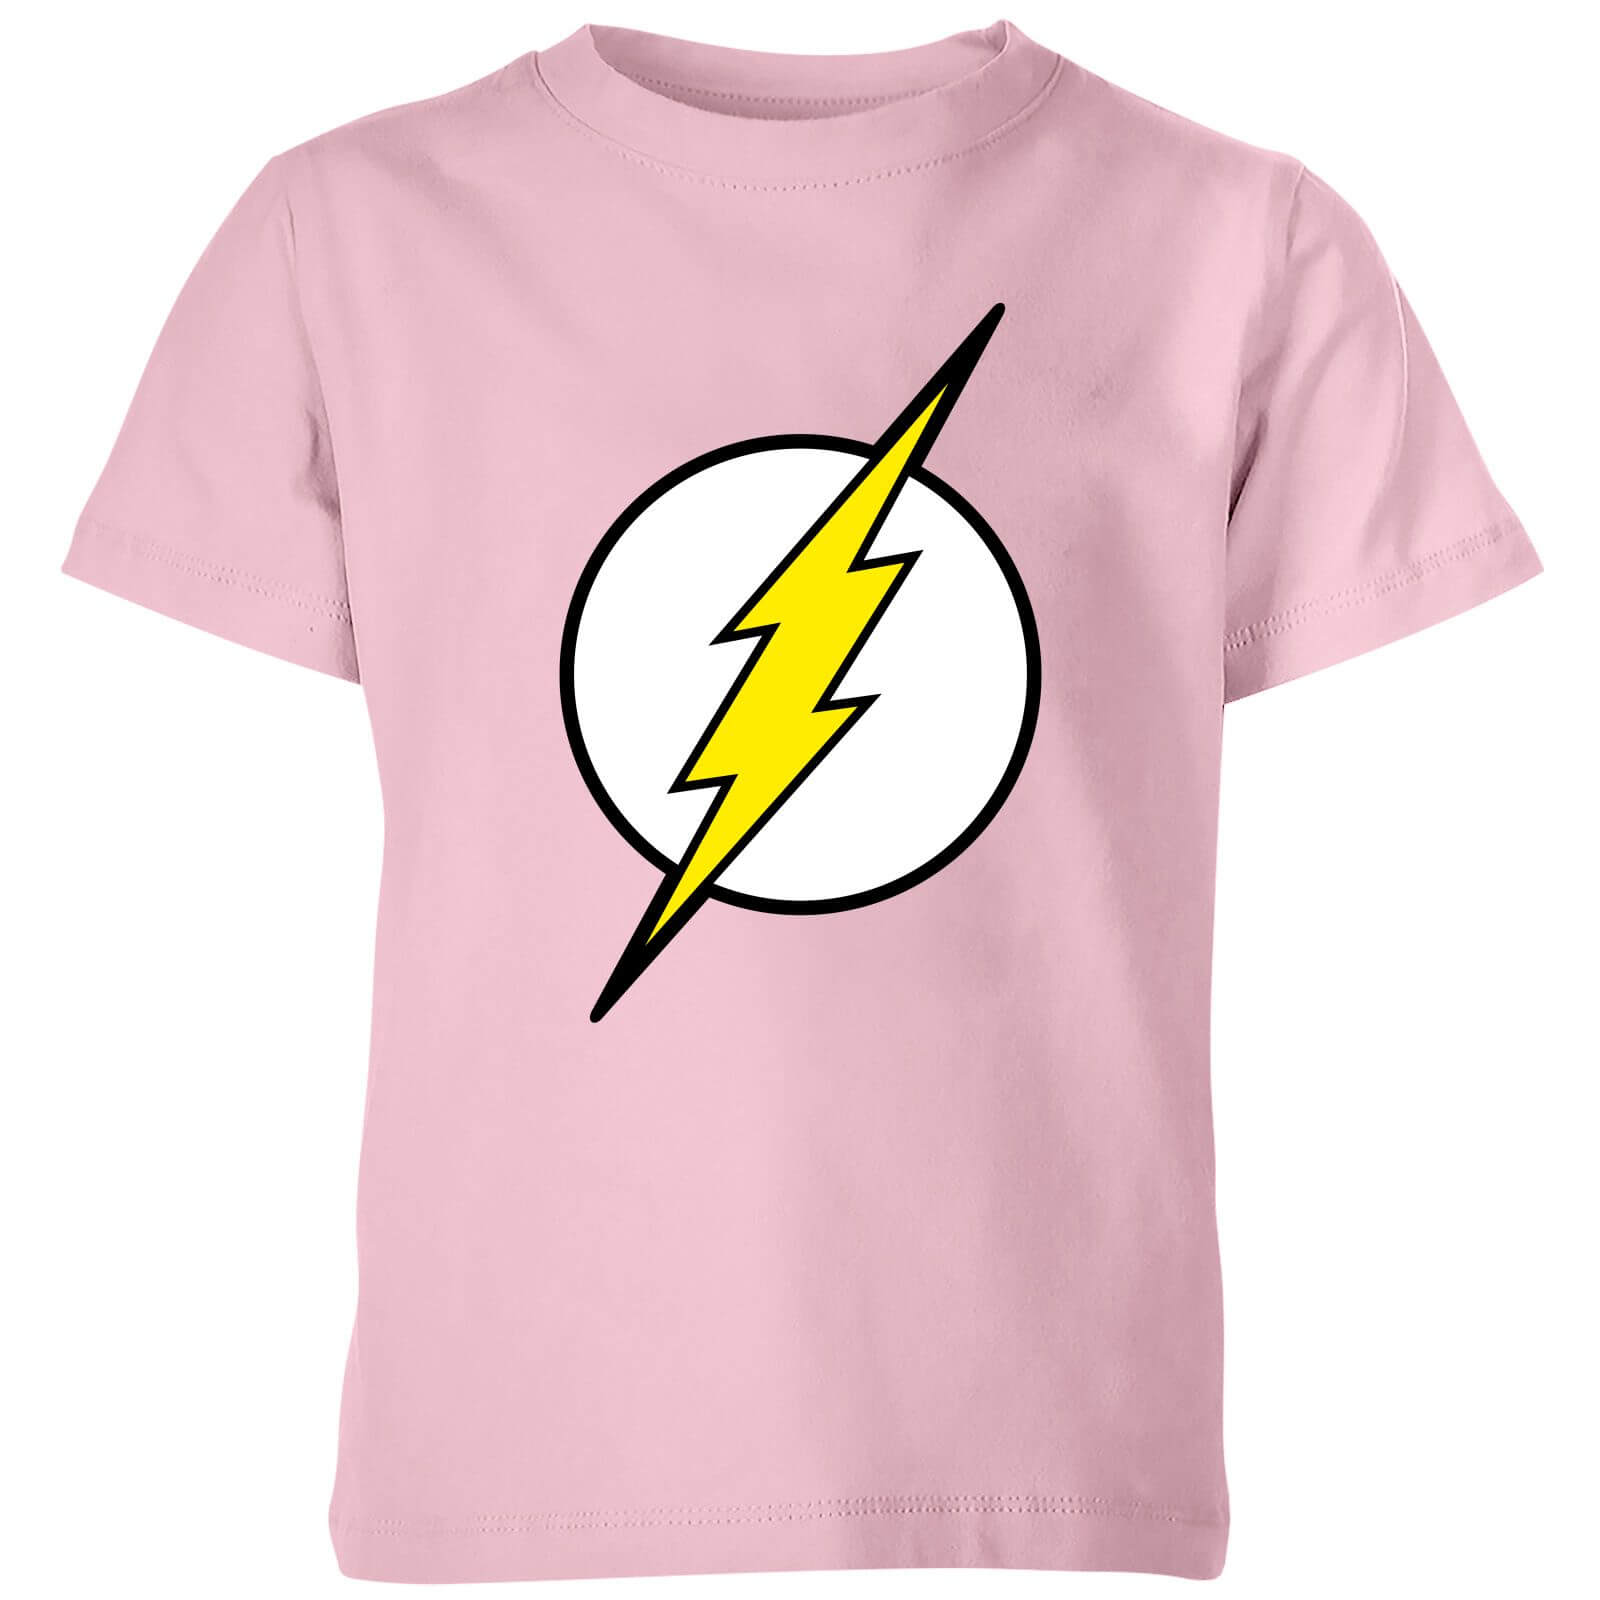 Justice League Flash Logo Kids' T-Shirt - Baby Pink - 9-10 Jahre von Justice League